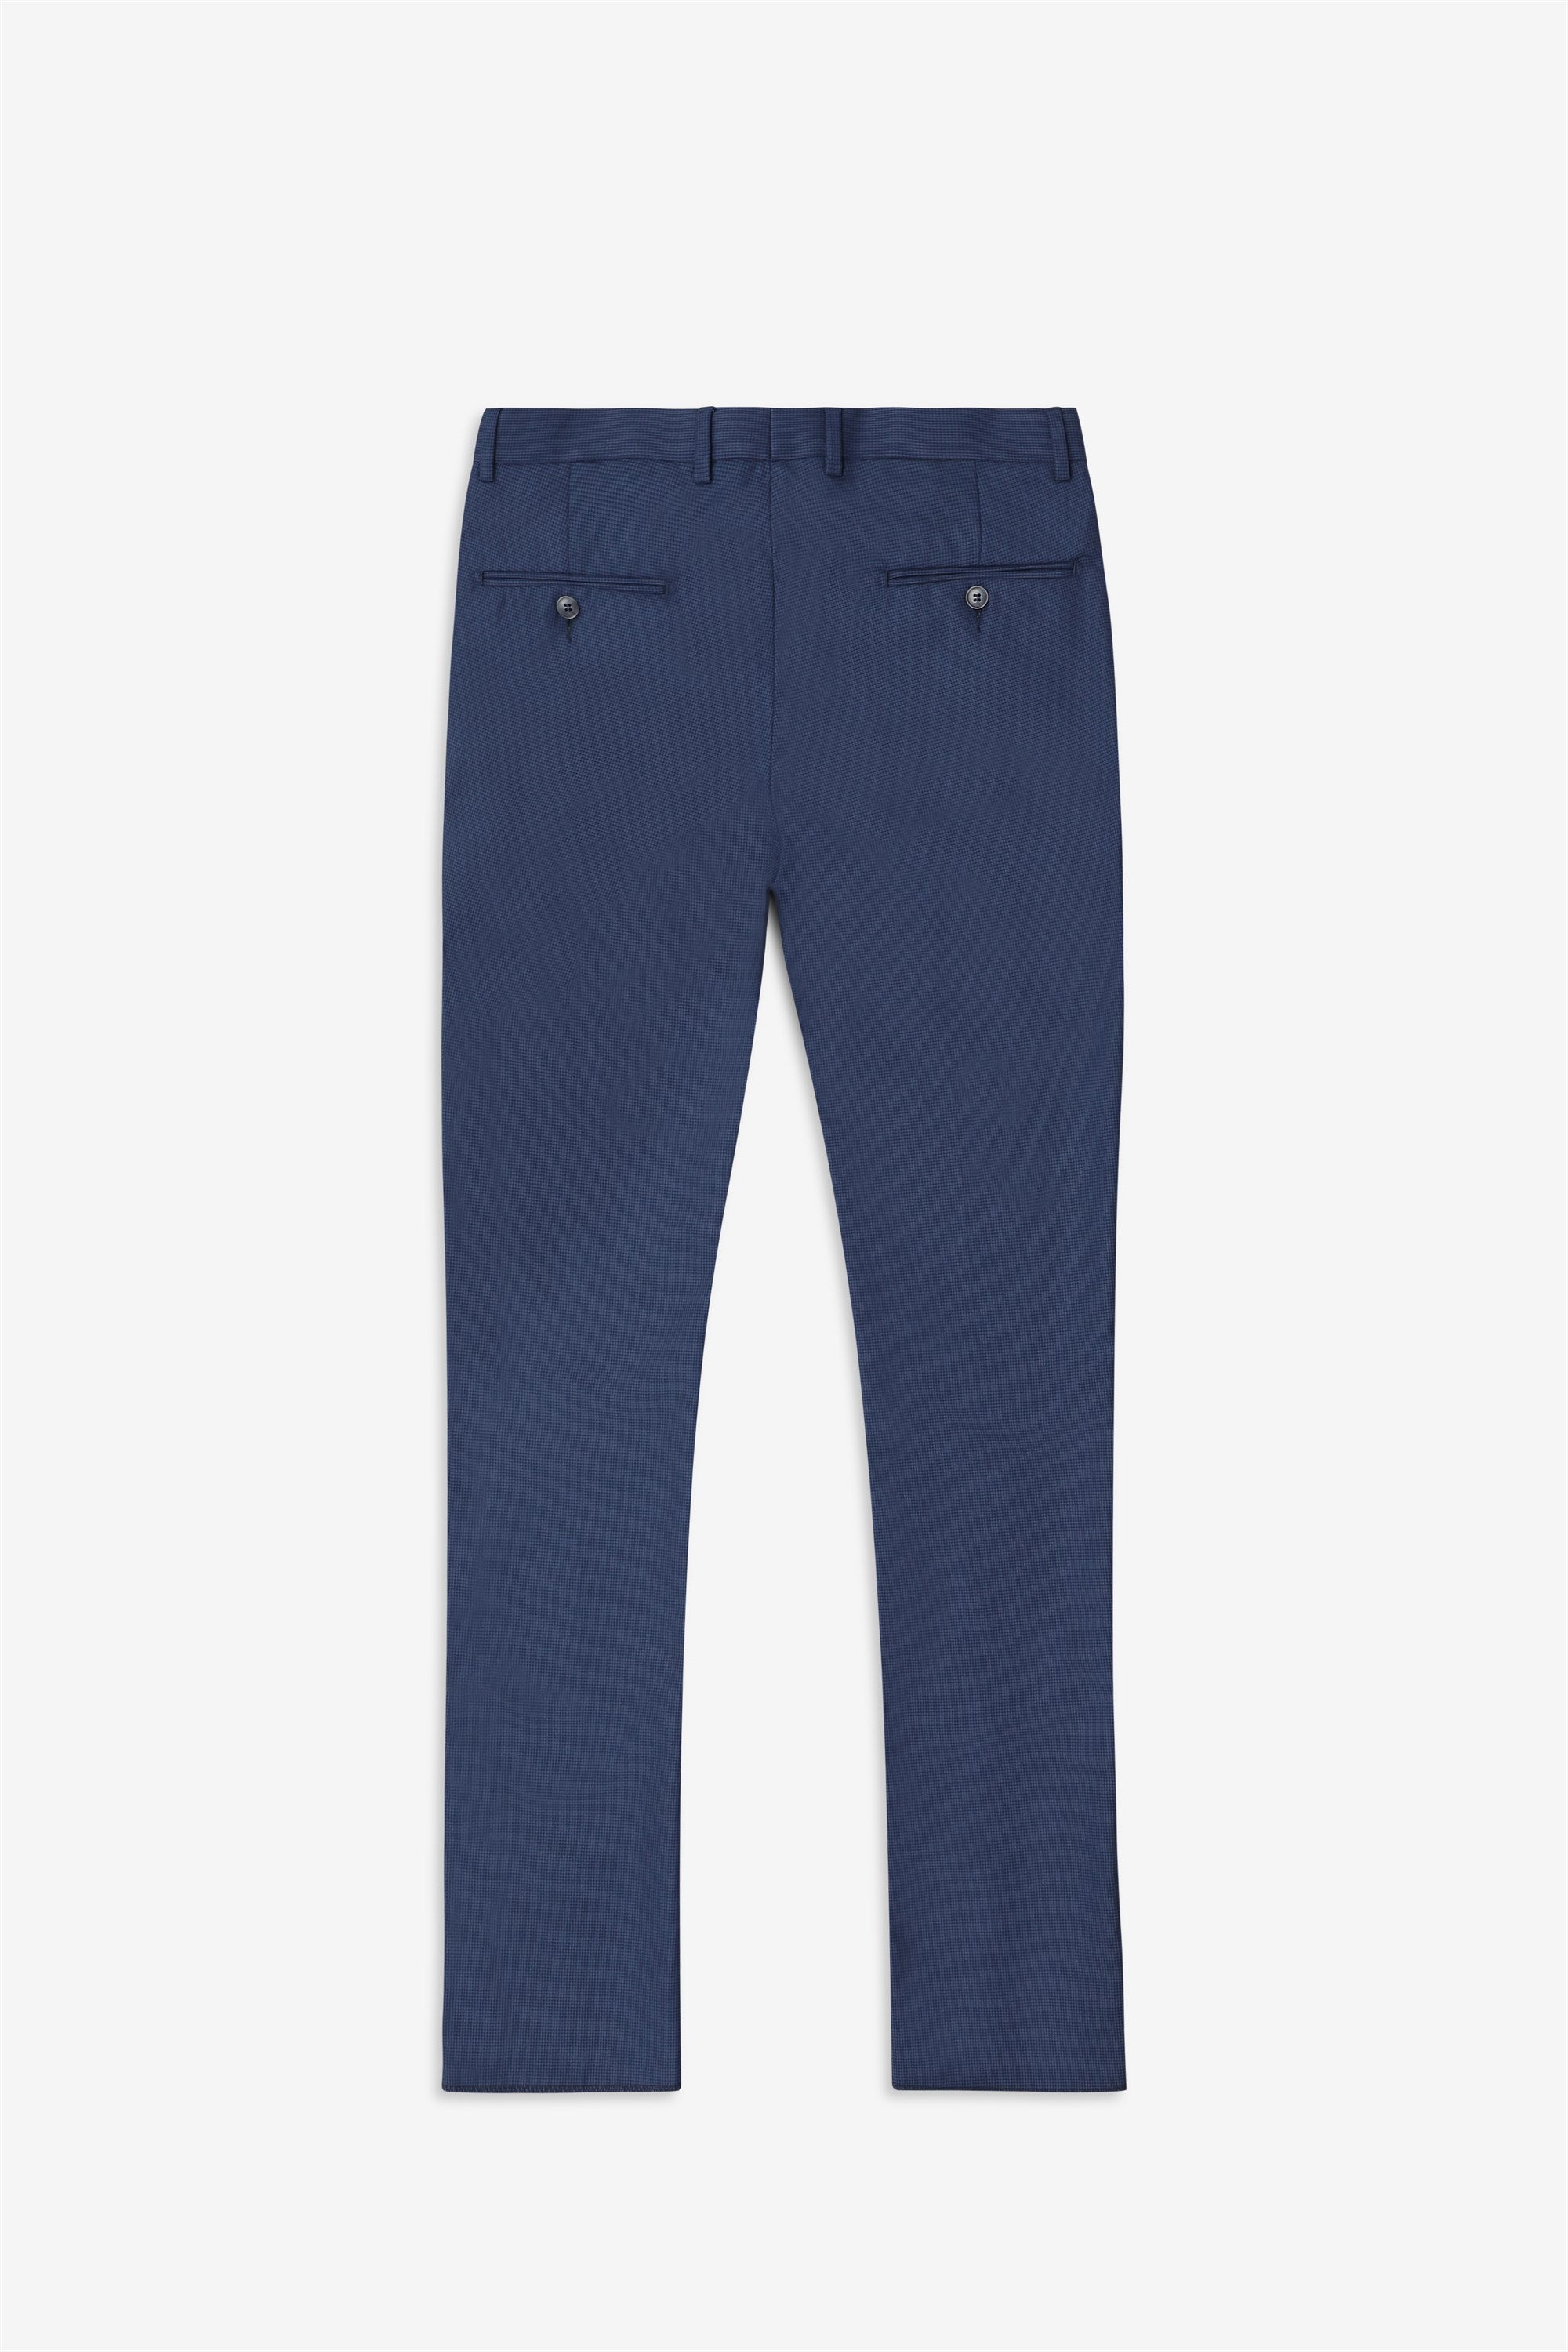 2023 New Men's Stretch Skinny Jeans Fashion Casual Cotton Denim Slim Fit Pants  Male Korean Trousers Streetwear Brand Clothing - AliExpress